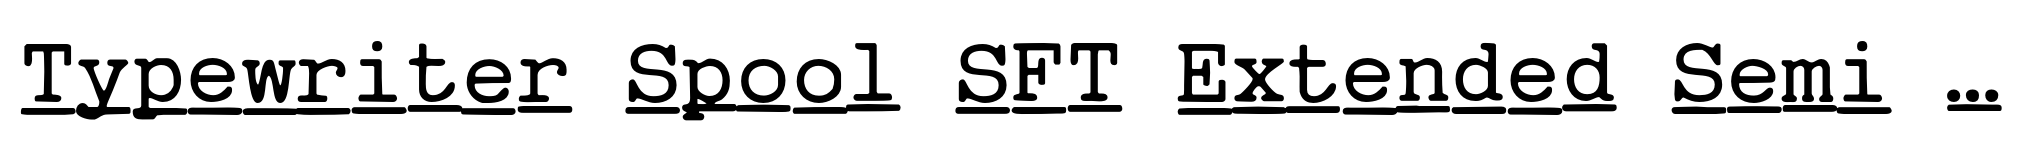 Typewriter Spool SFT Extended Semi Bold Italic image